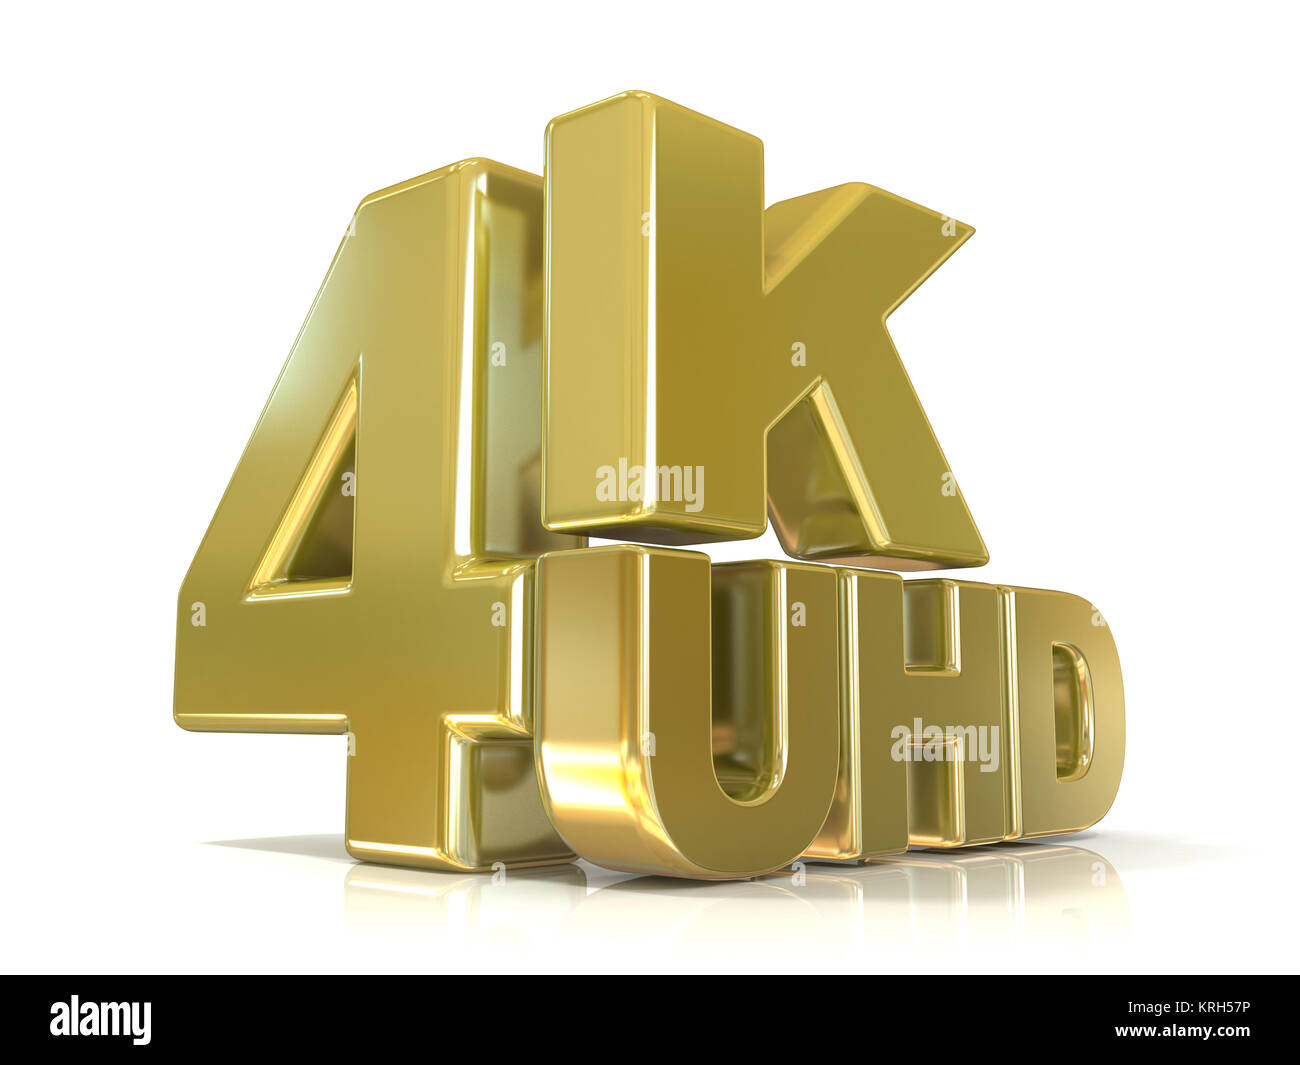 Ultra HD (high definition) resolution technology. 4K UHD concept. 3D Stock Photo